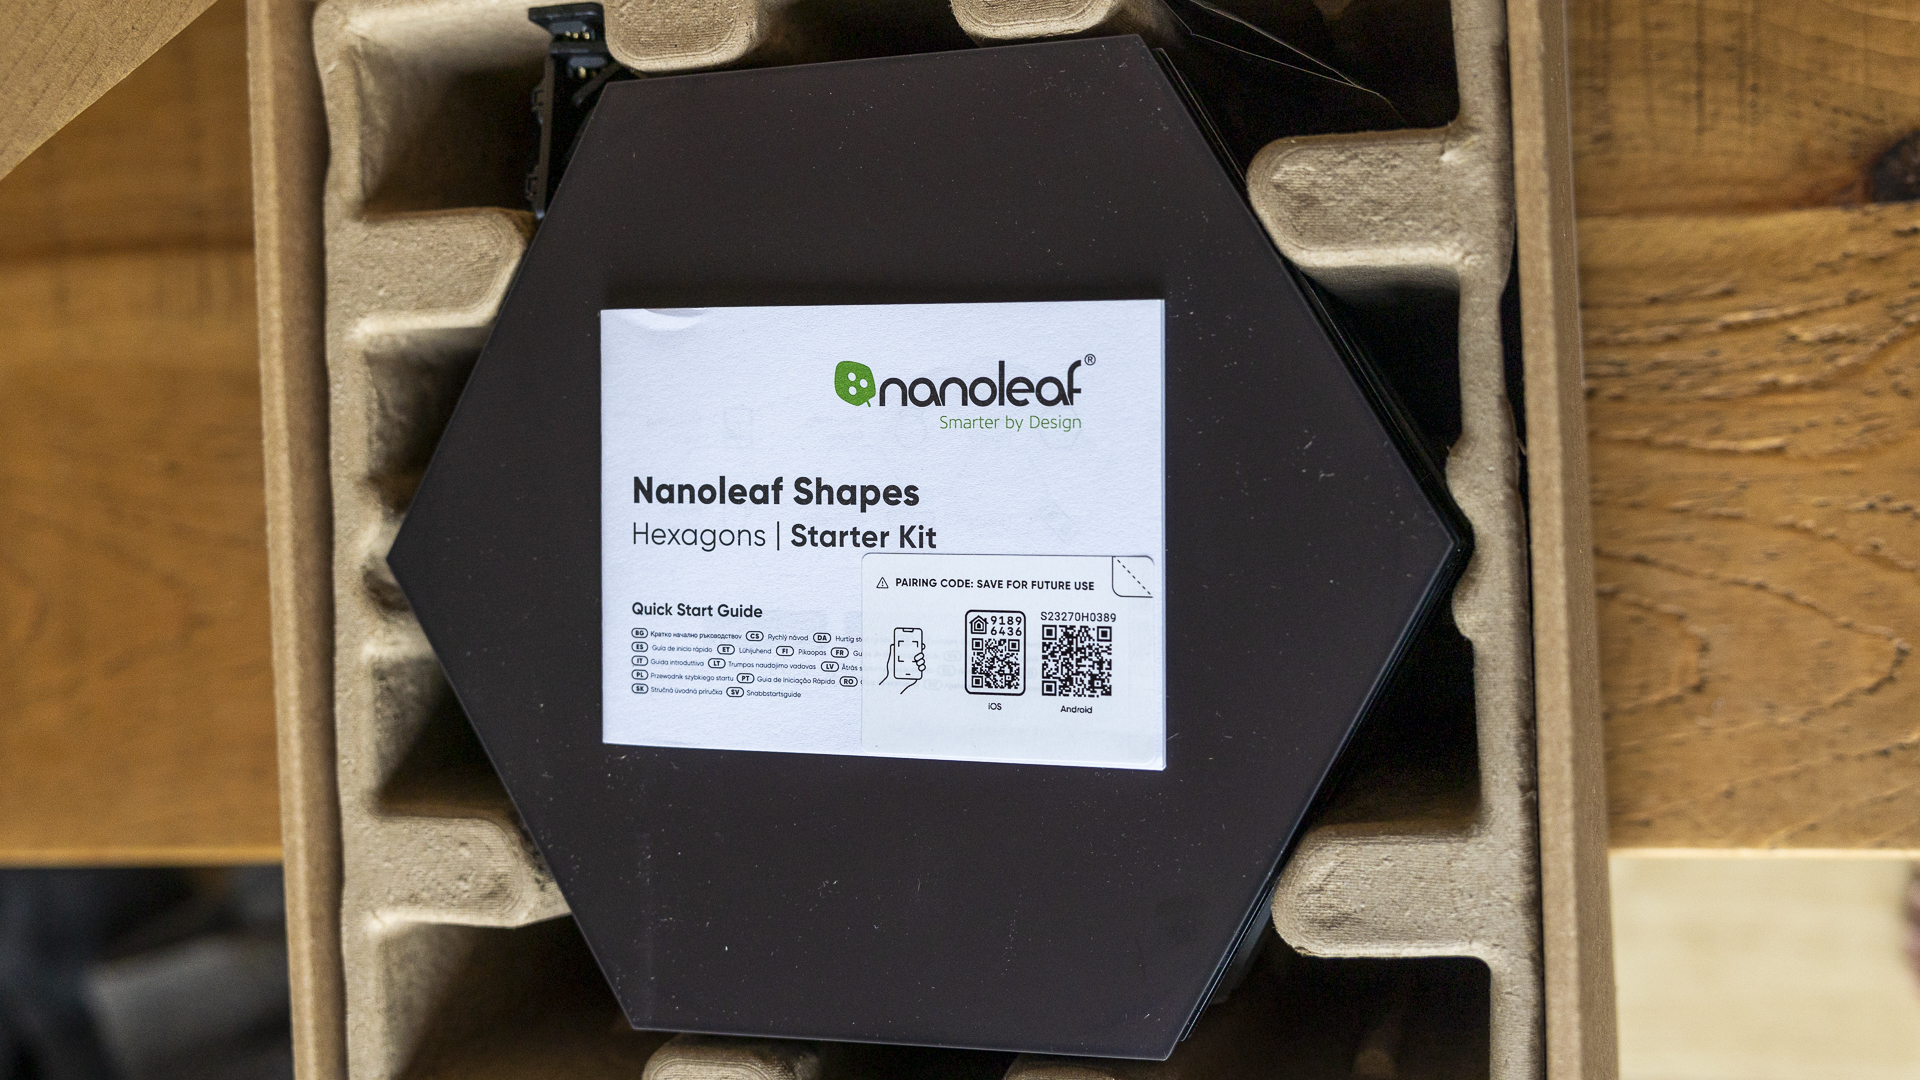 The Nanoleaf Black shapes in the box